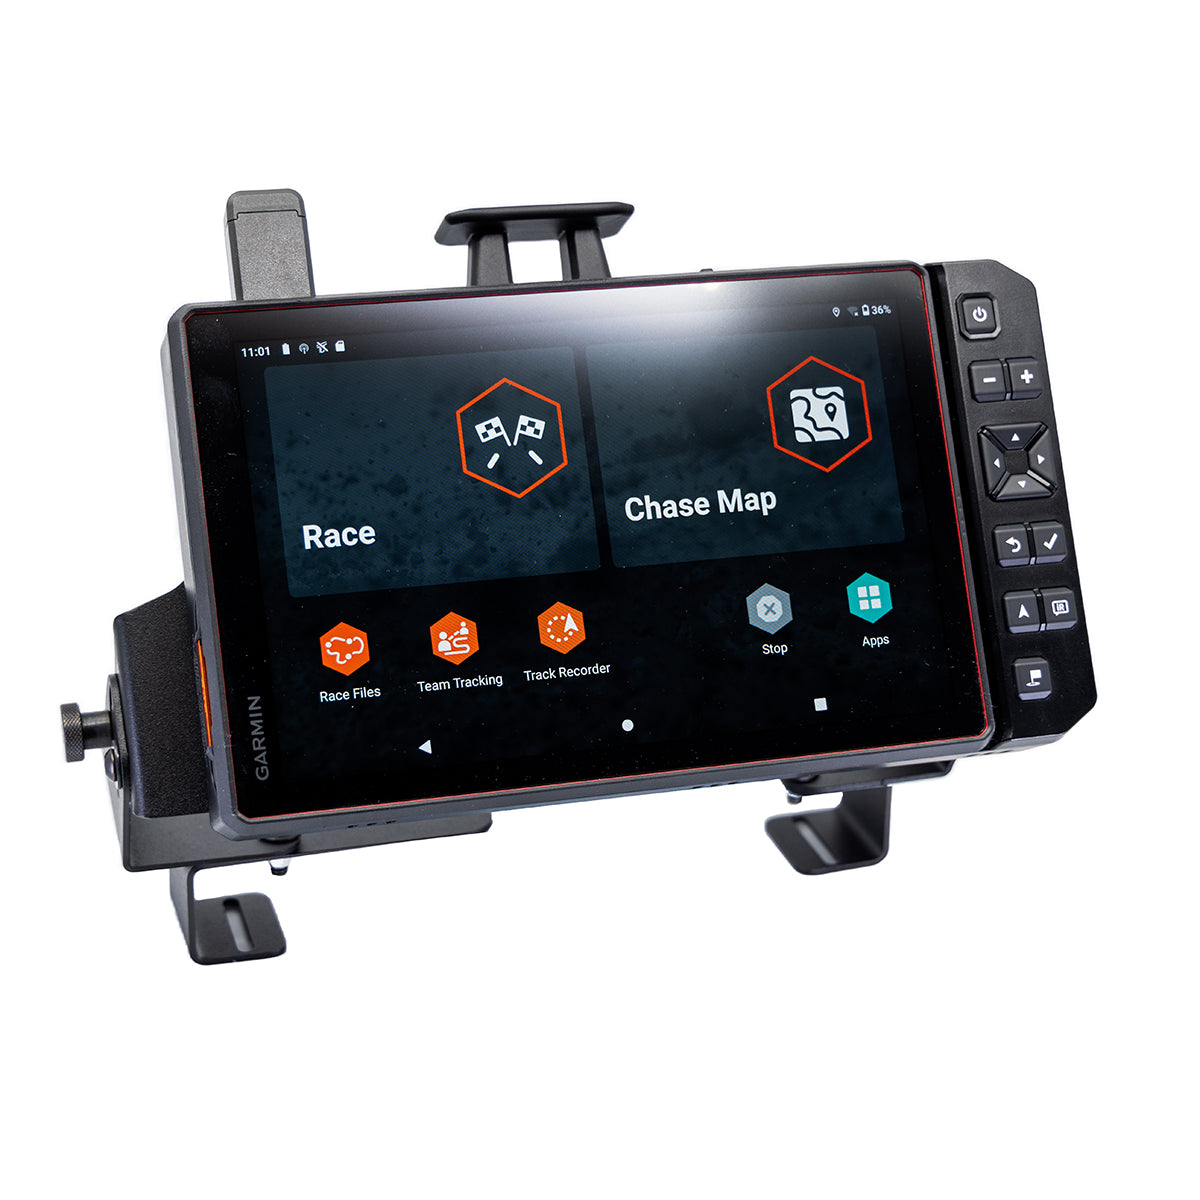 Garmin Adapter Plate with Garmin GPS